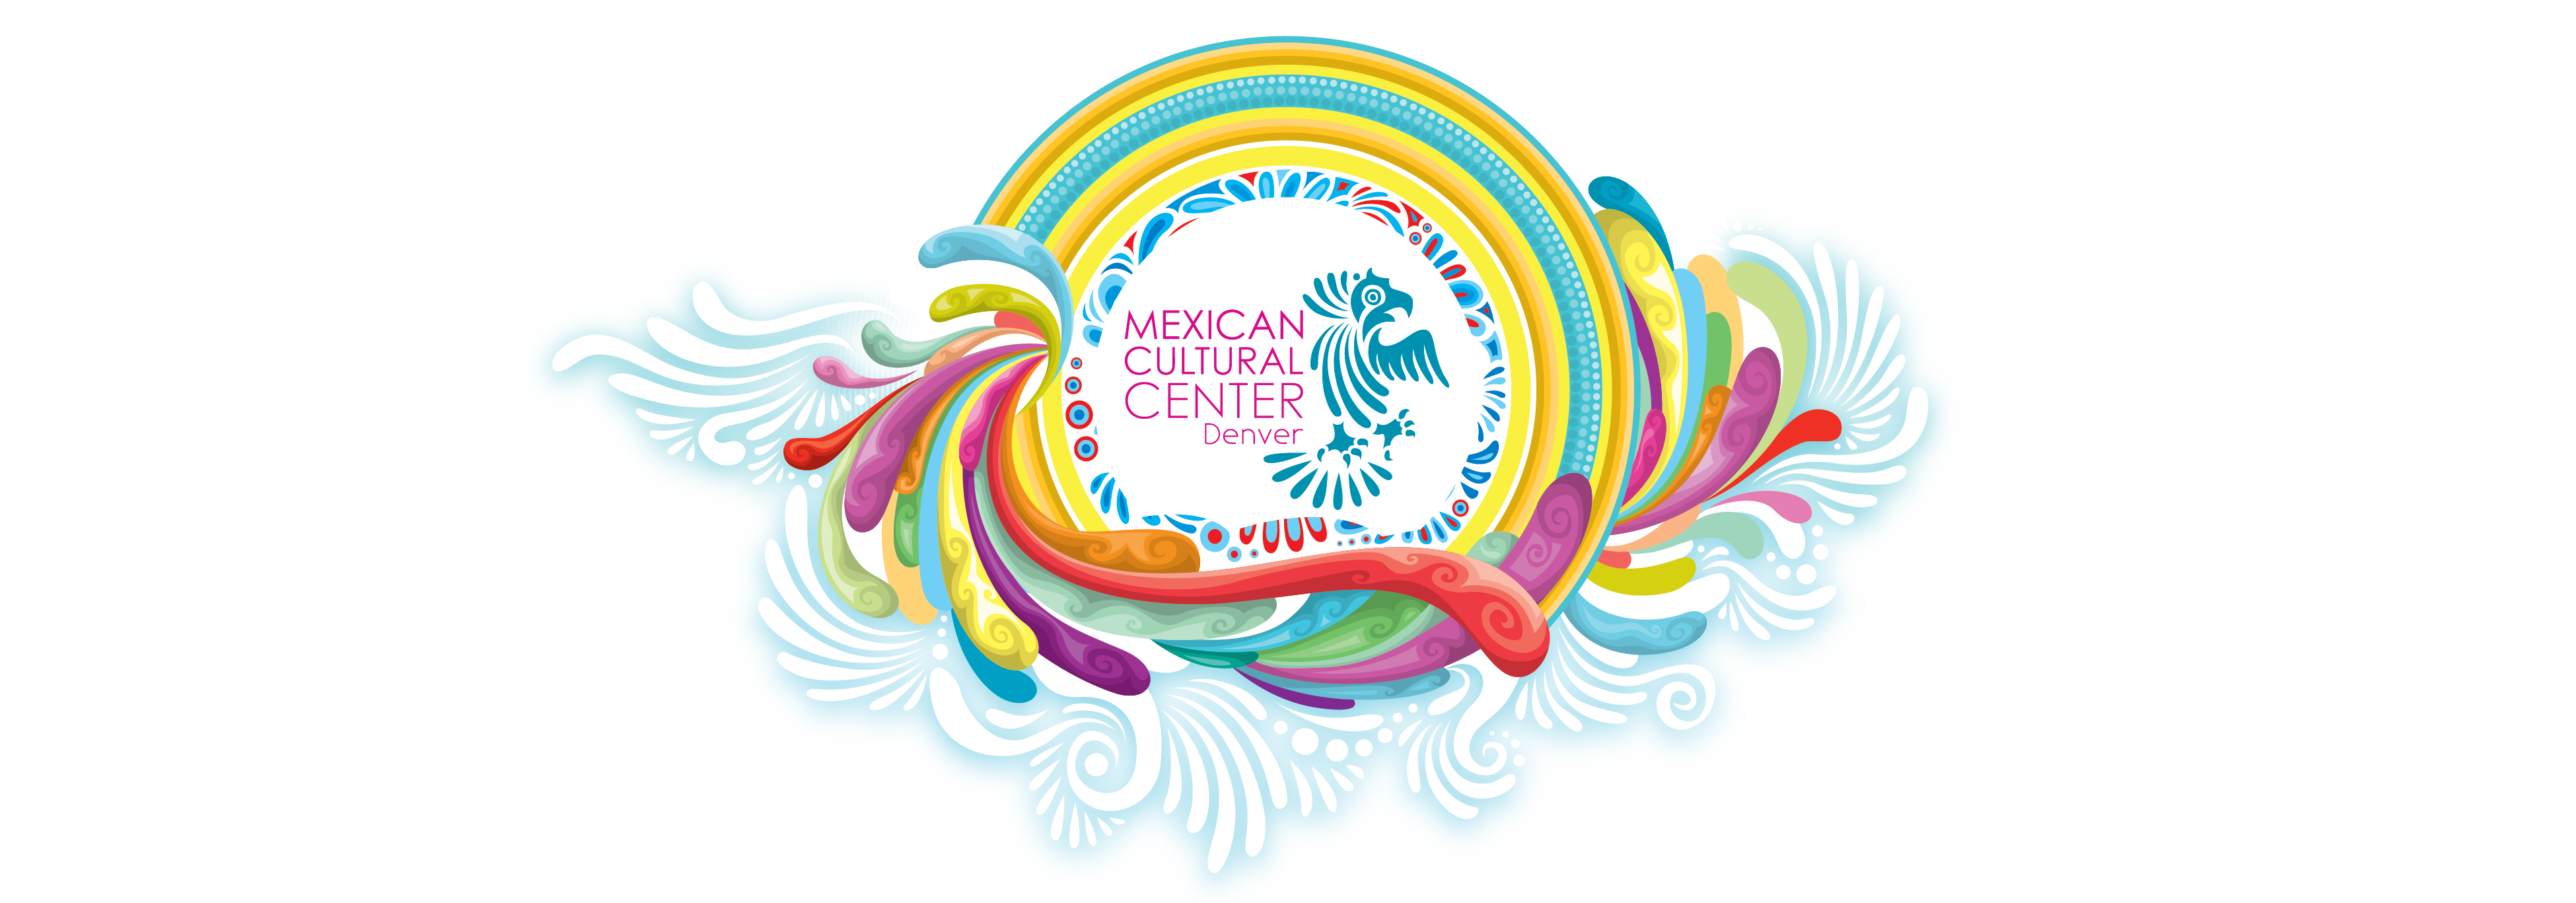 Culture clipart culture mexican. About us cultural center